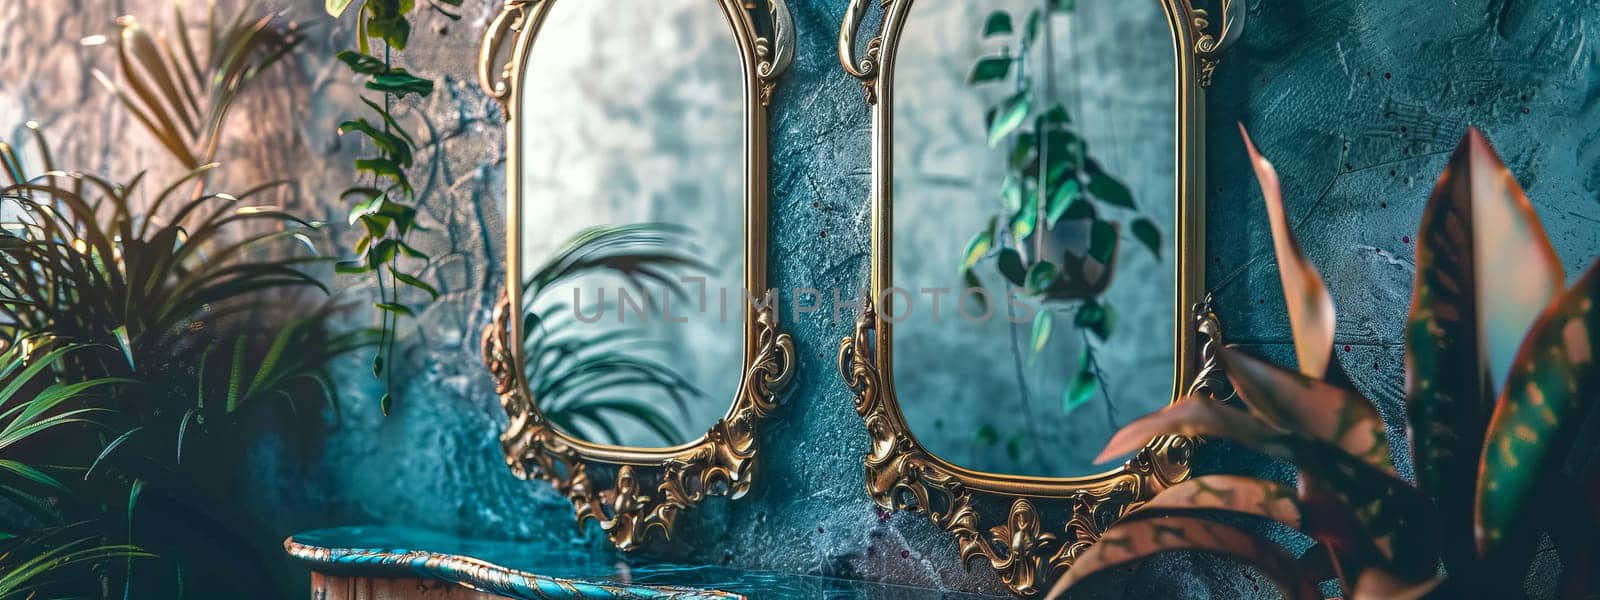 Ornate golden mirrors reflecting a serene indoor garden setting